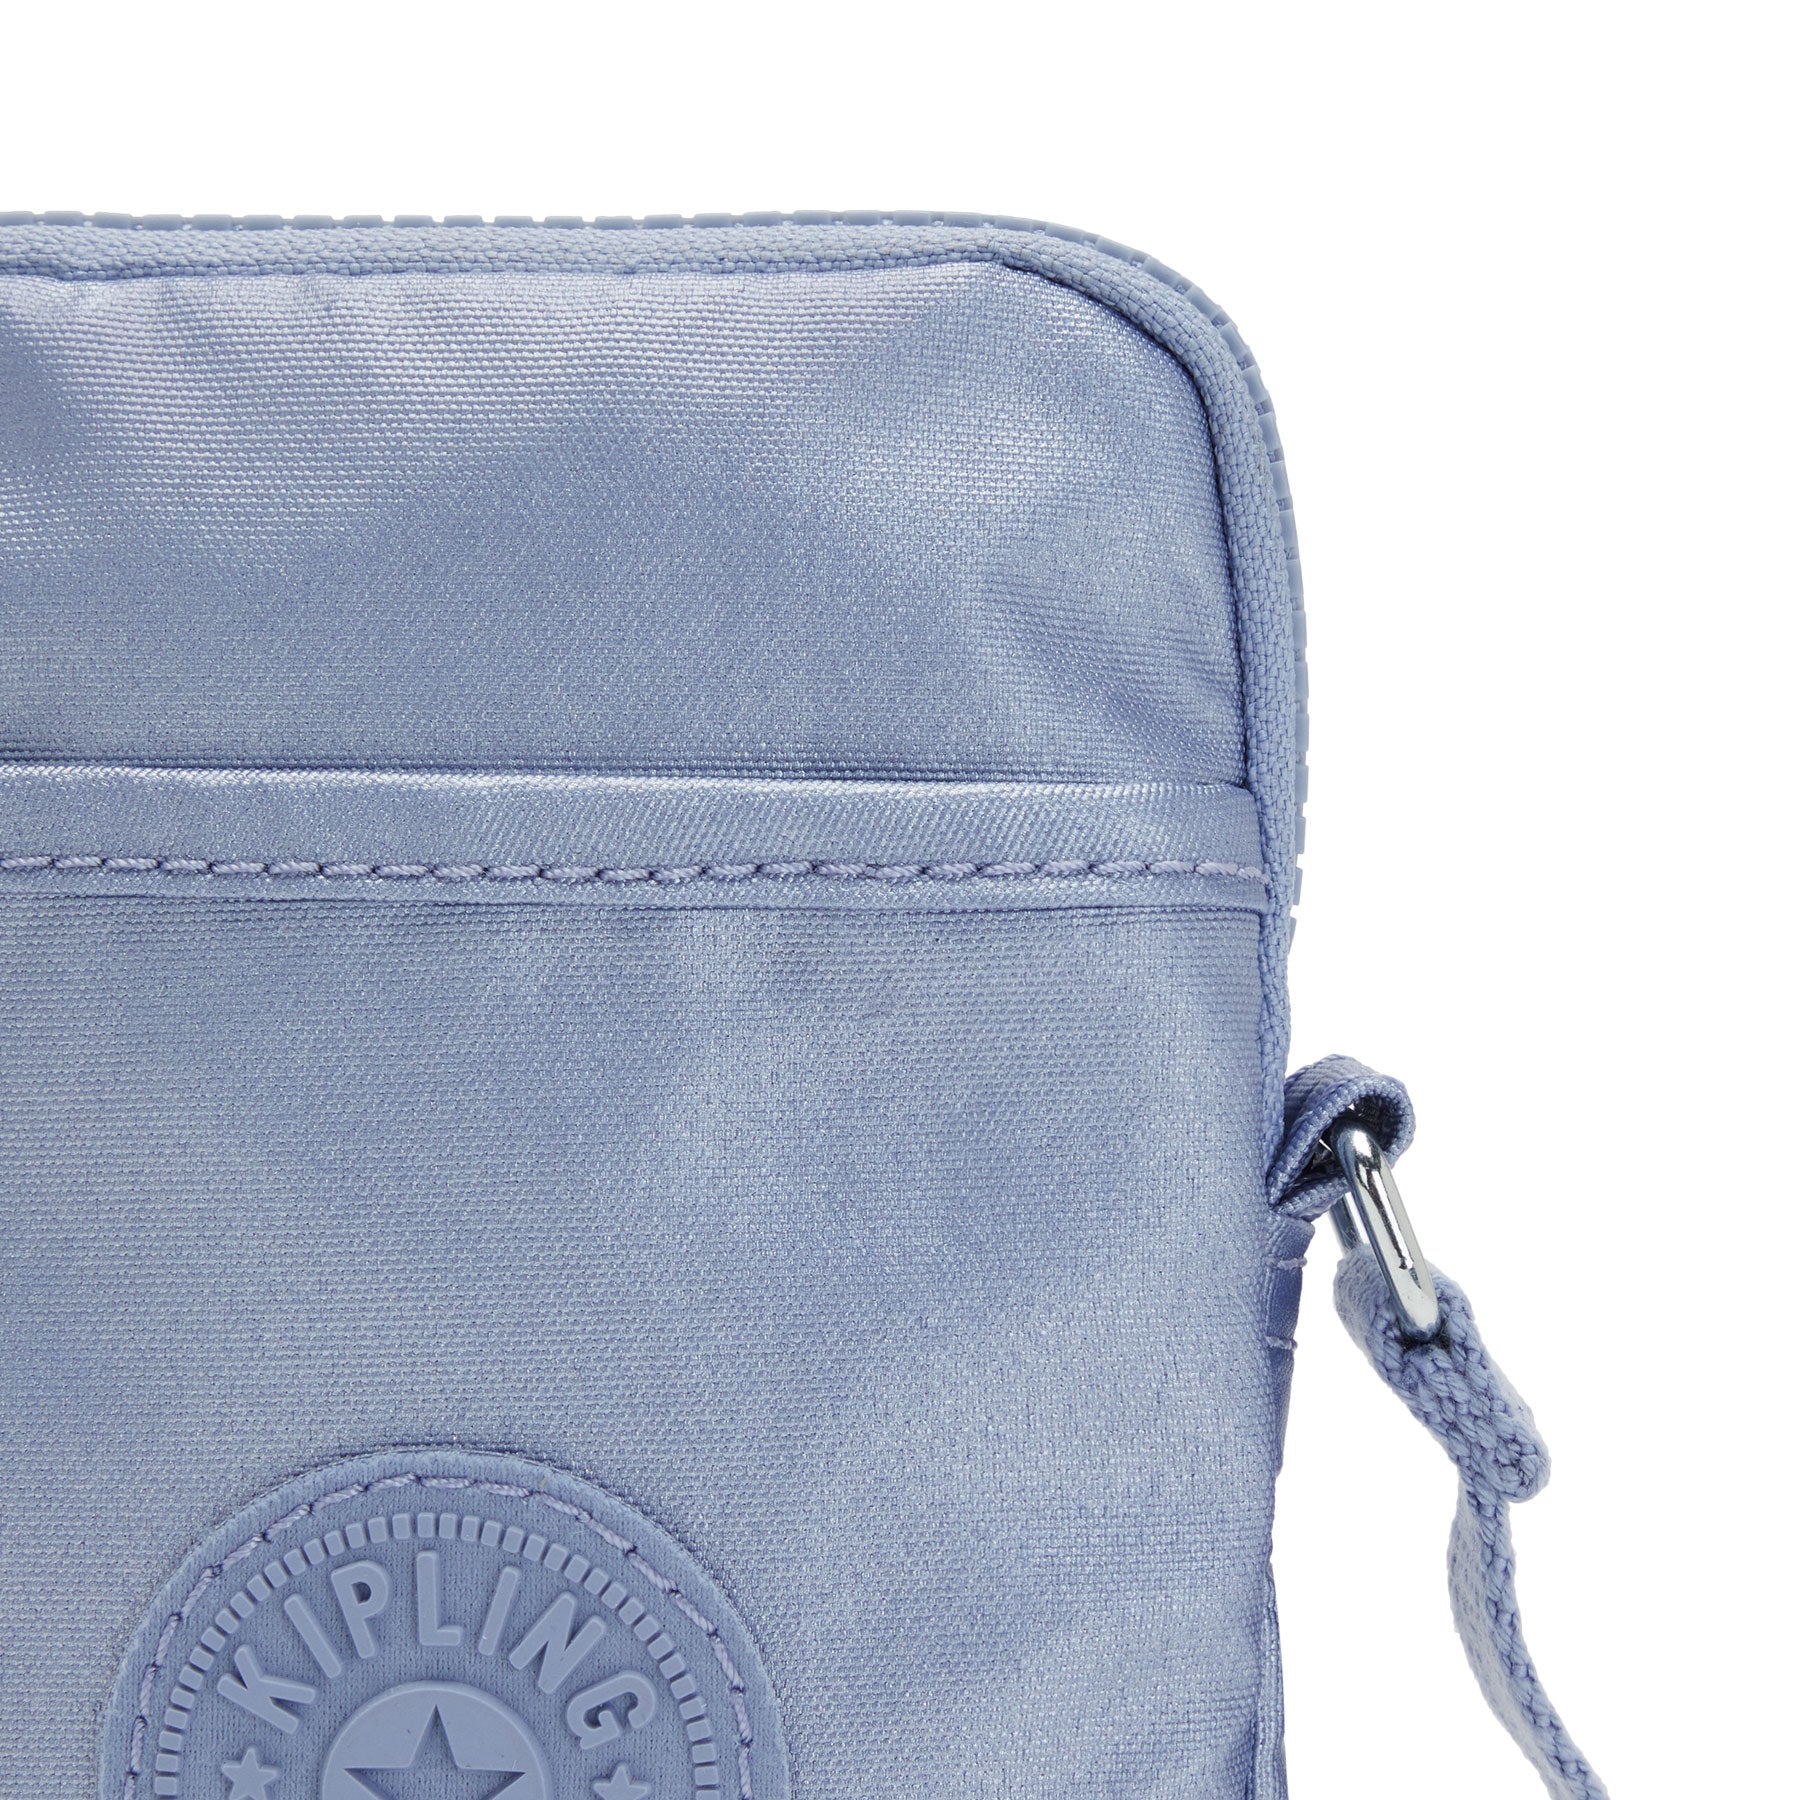 Kipling Tally Crossbody Phone Bag Deep Sky Blue : Target